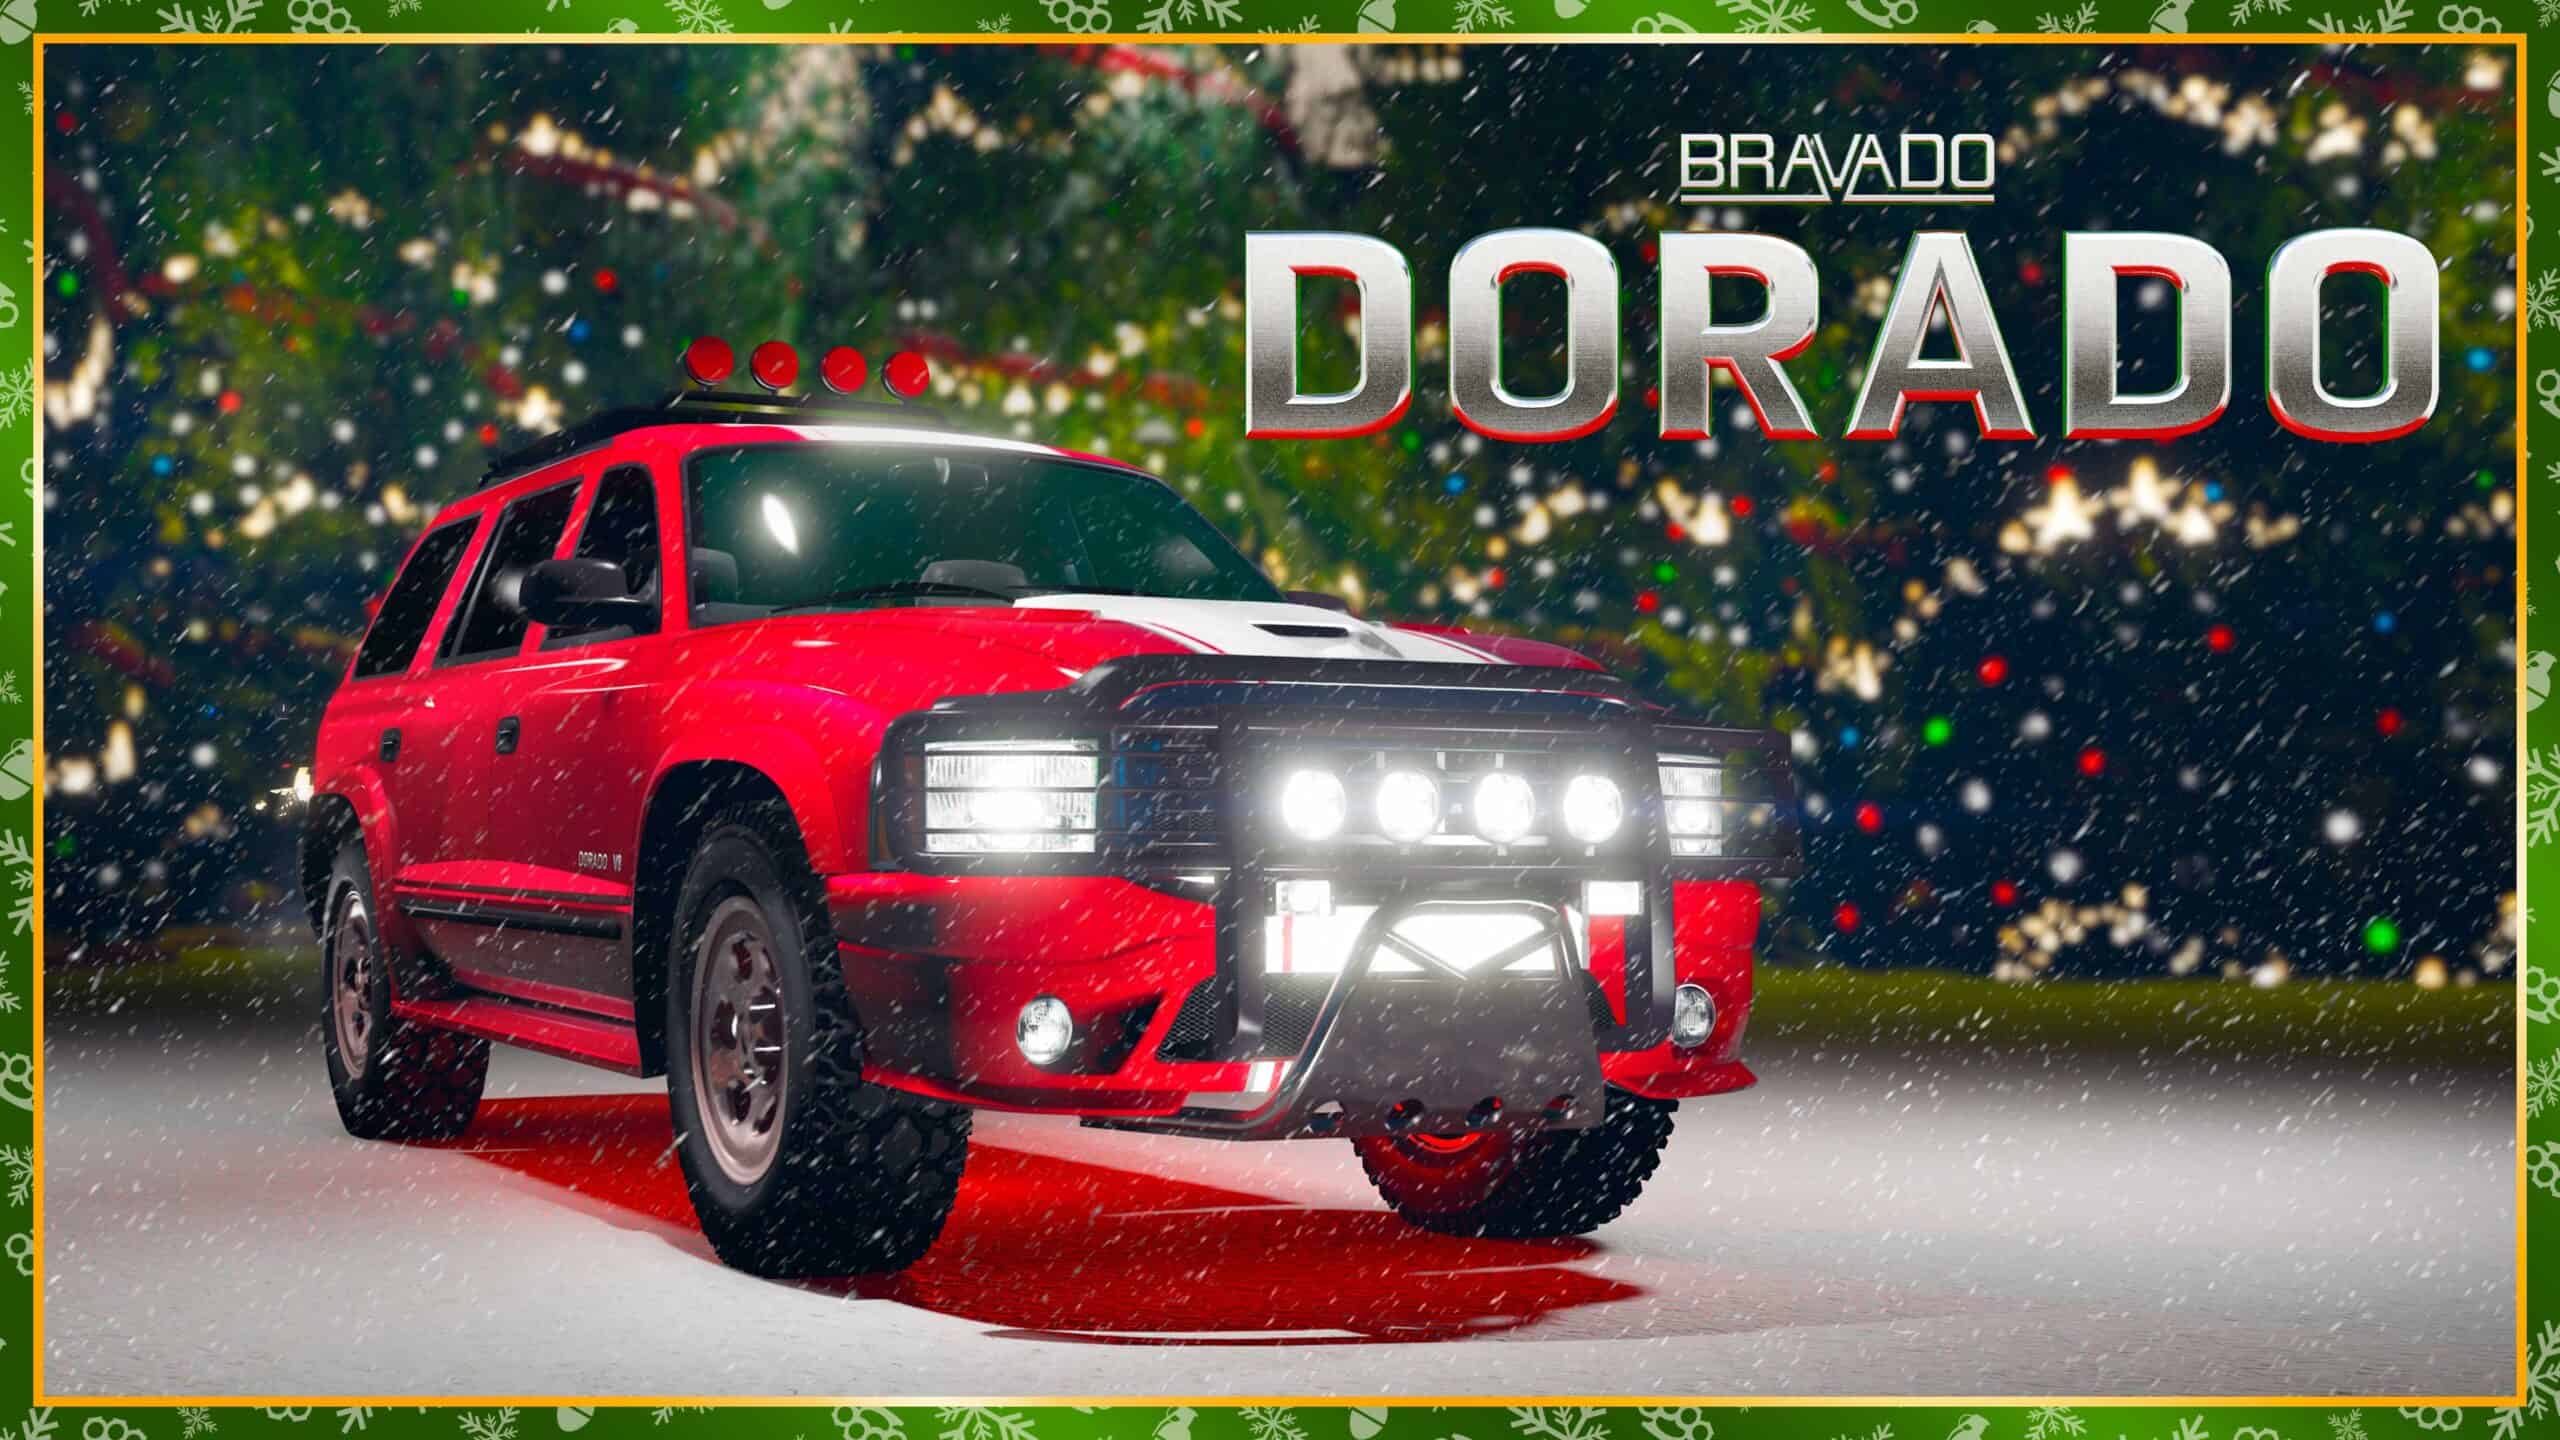 Nouveau Bravado Dorado (SUV) dans GTA Online